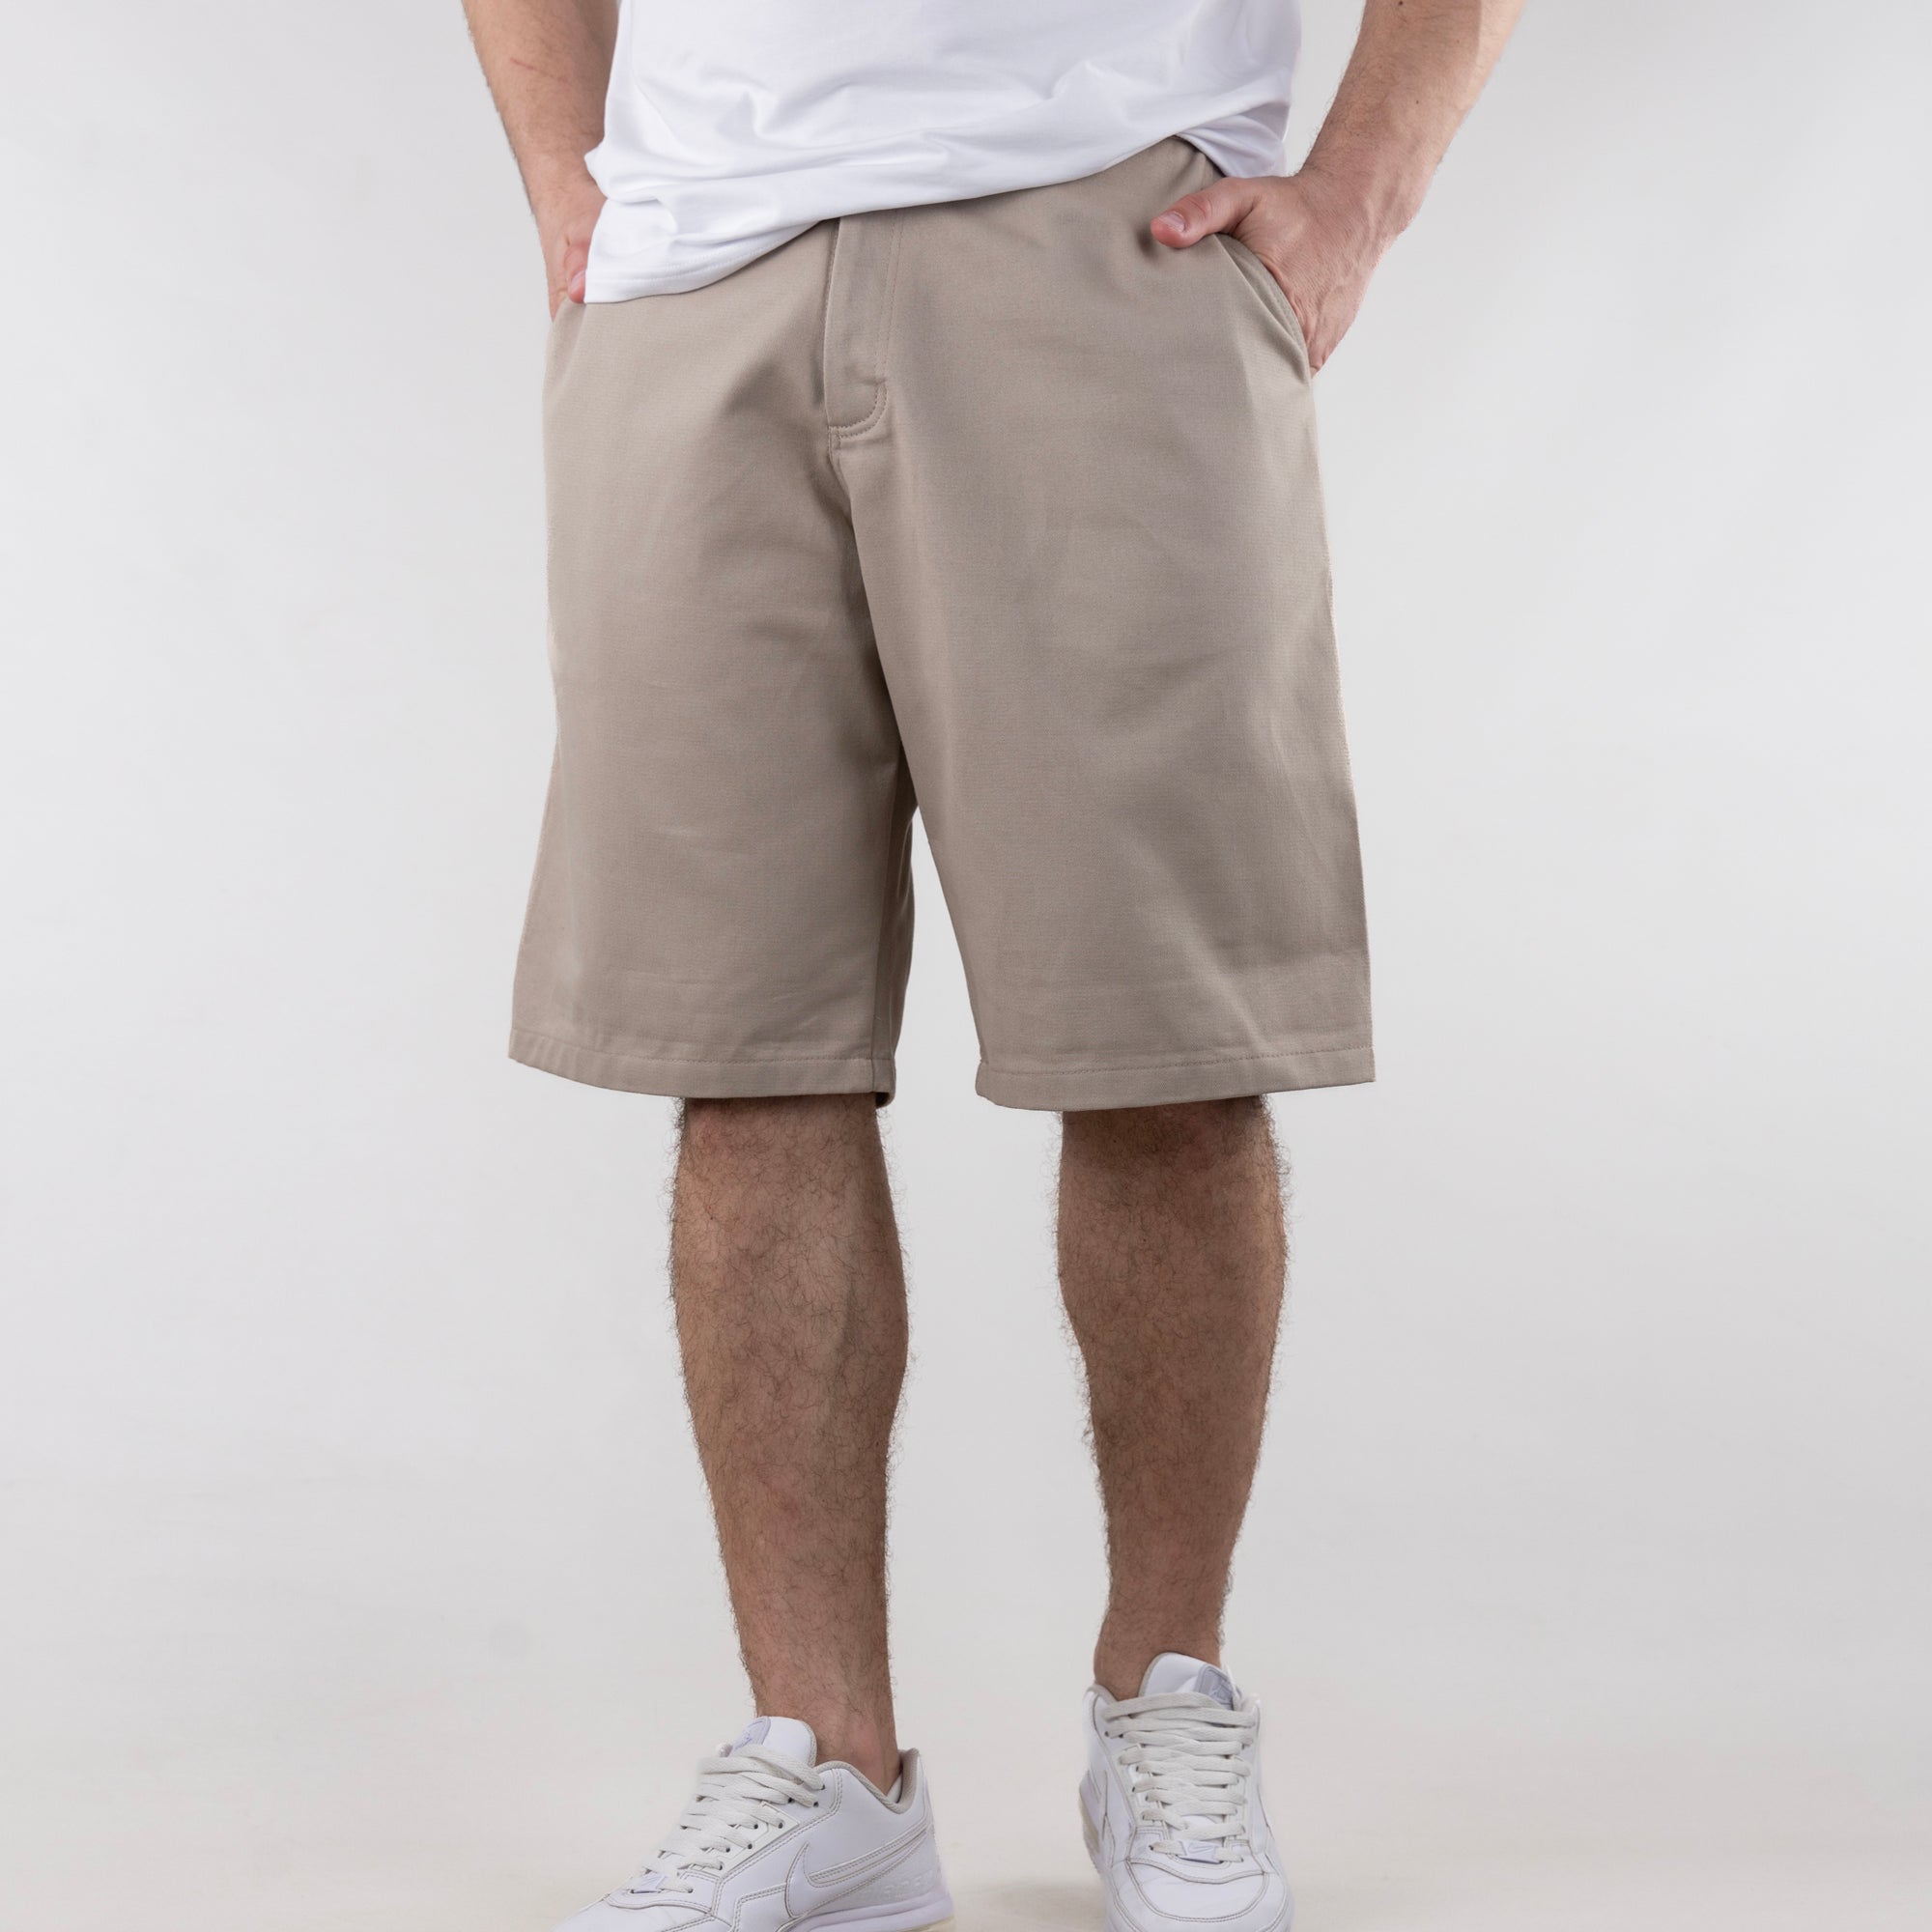 Men's Wide Shorts, Casual Shorts